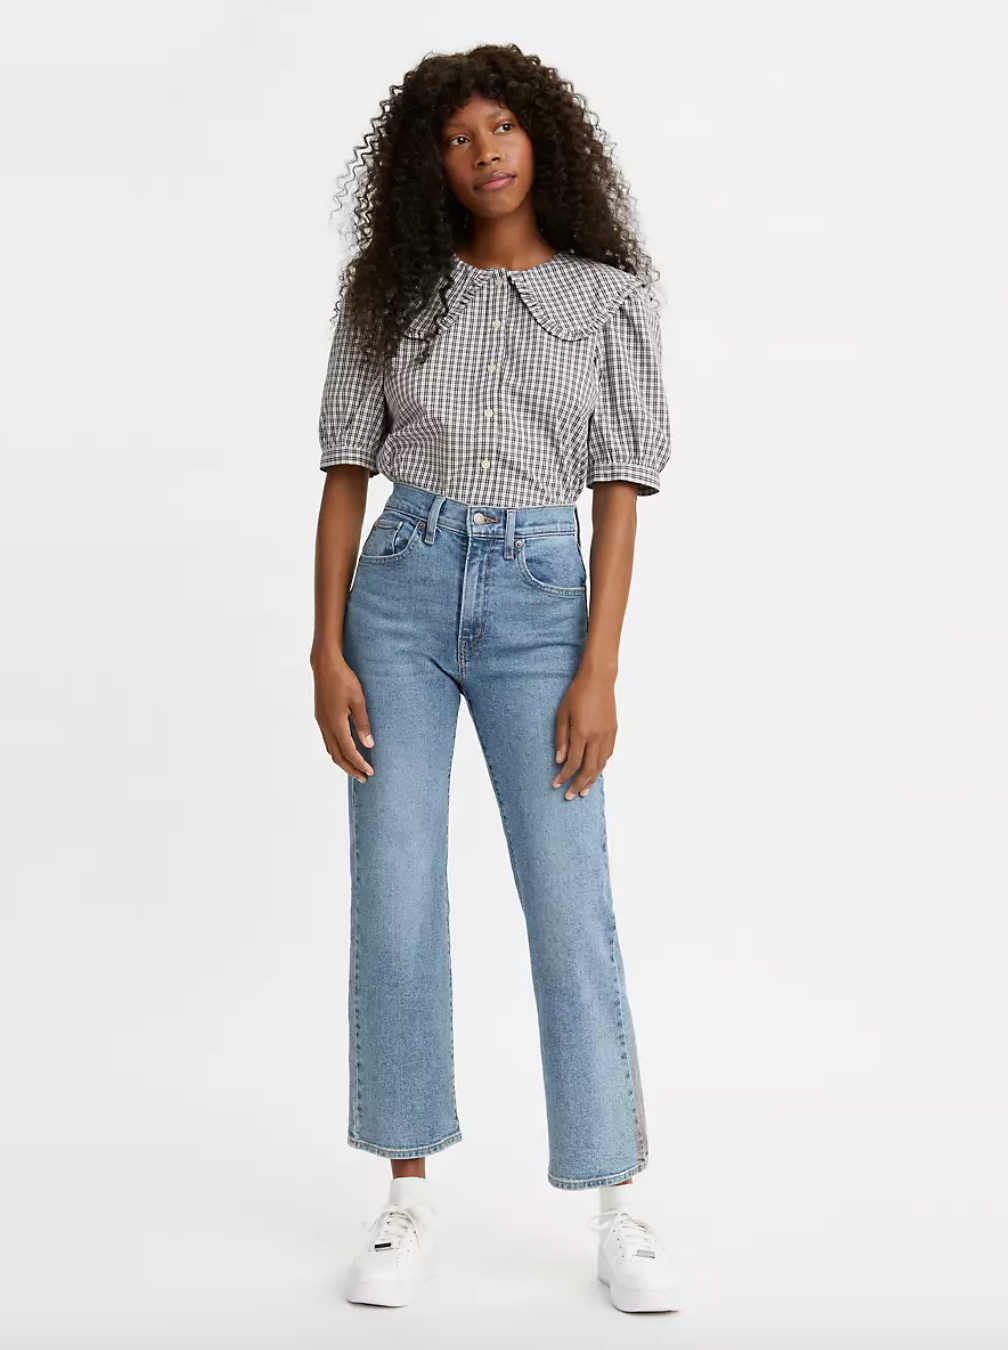 model wearing light wash crop flare jeans